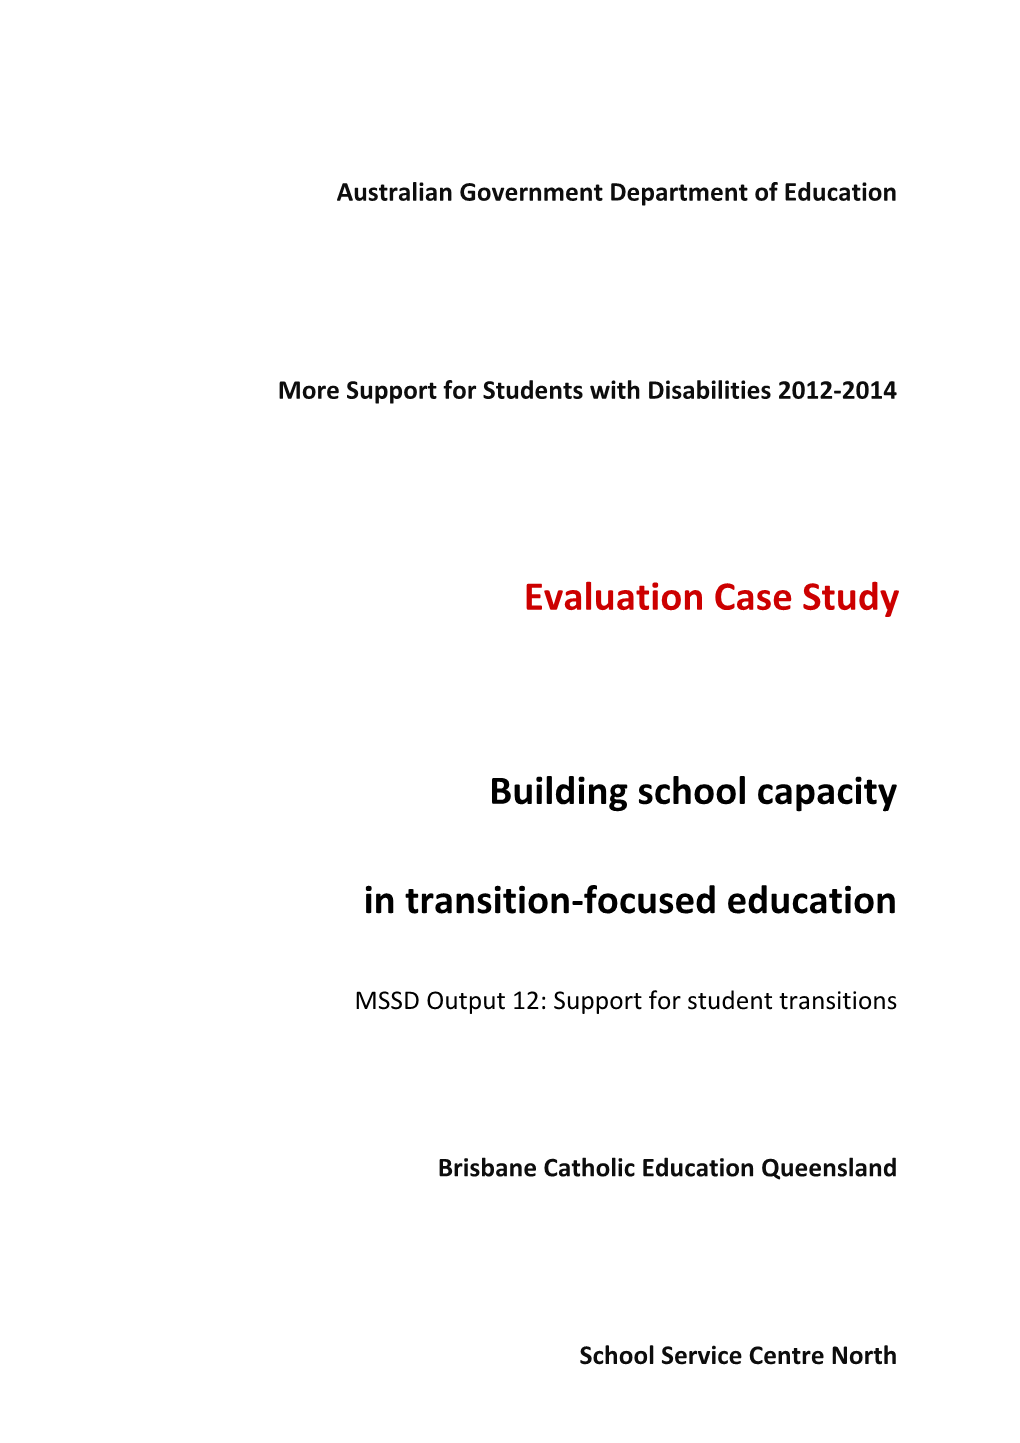 Building School Capacity in Transition-Focused Education